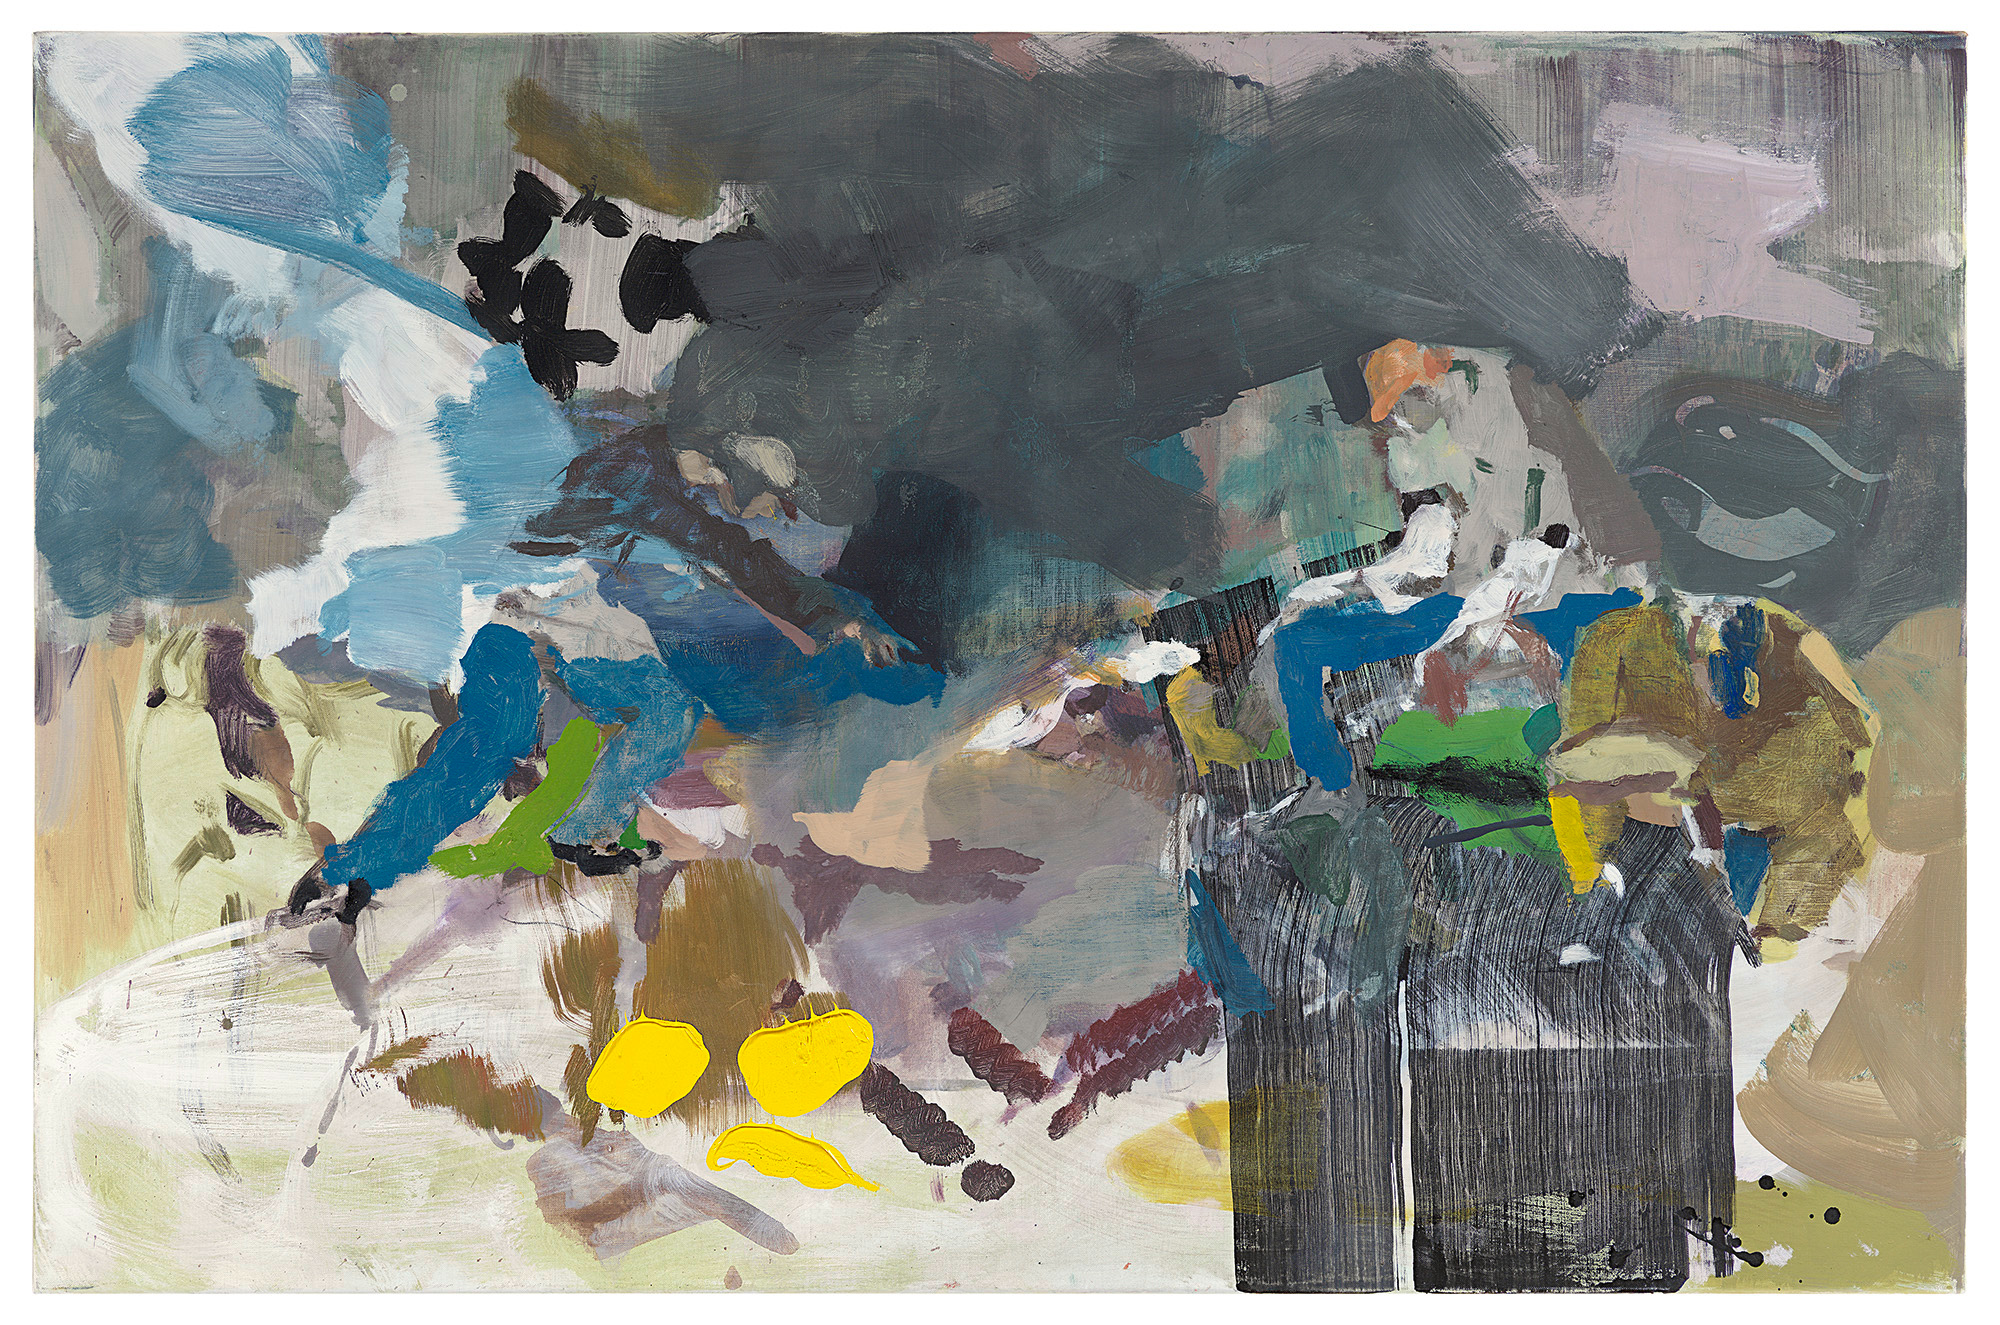 Maki Na Kamura, Claim of Colours II, 2021, oil, egg tempera on canvas, 110 x 170 cm